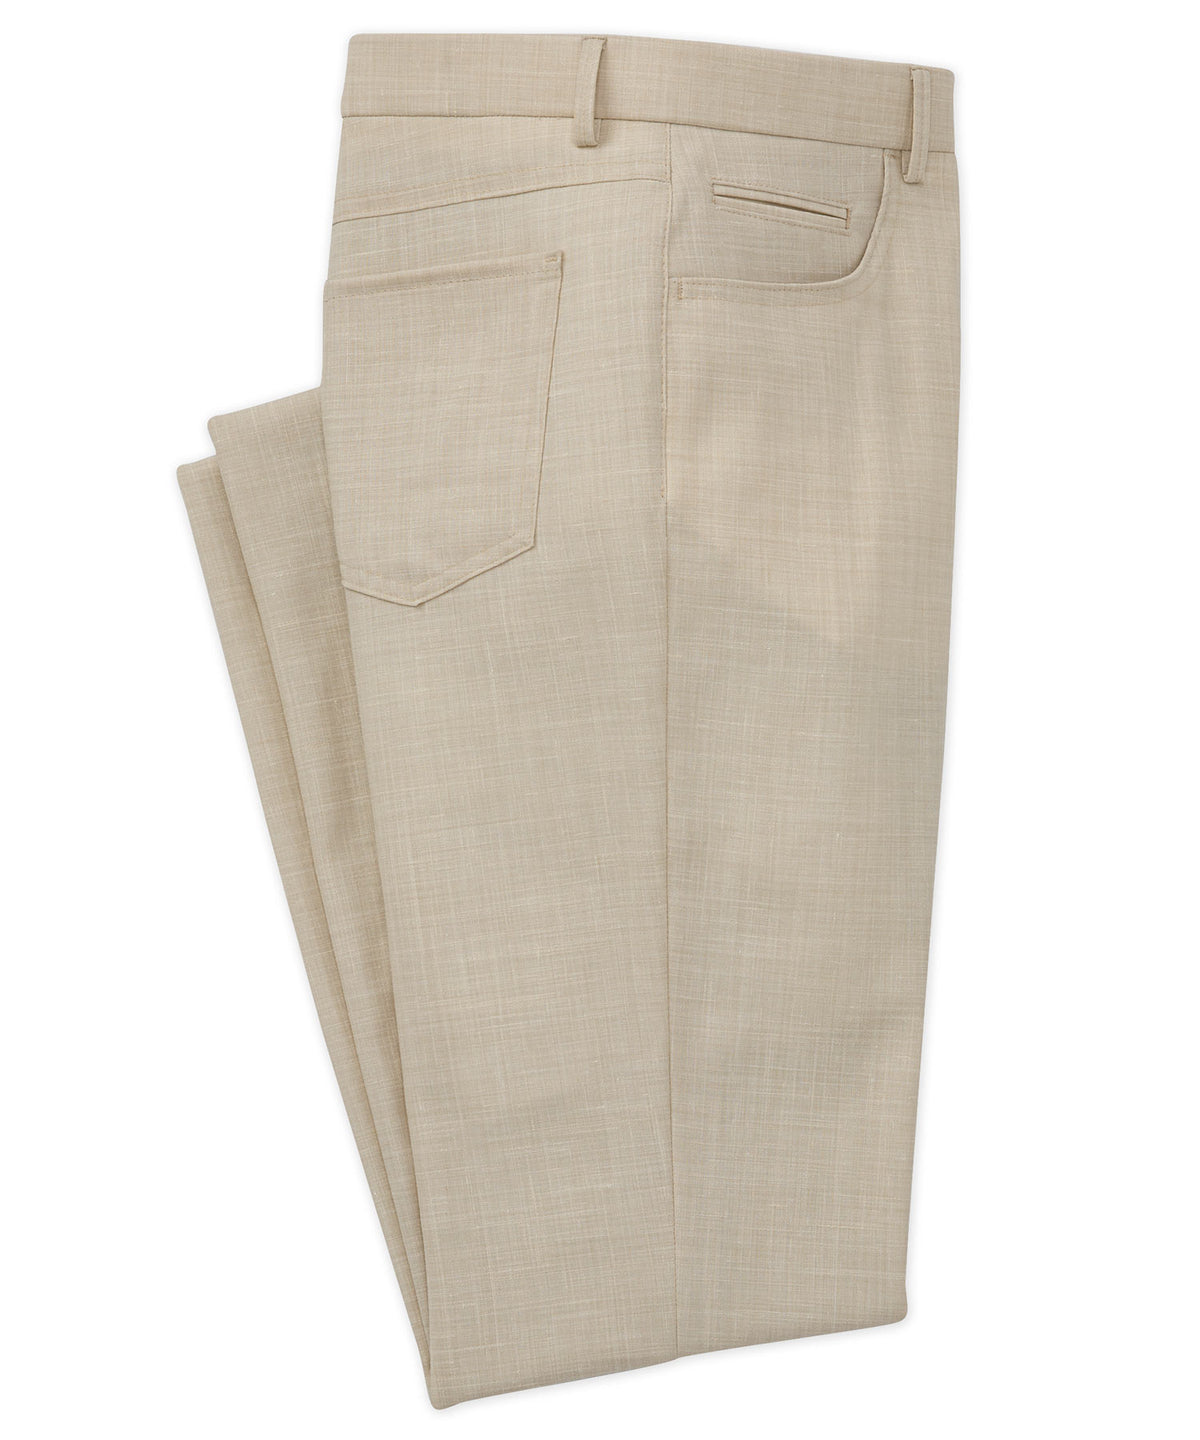 Westport Black Micro Donegal Stretch Five Pocket Linen Pant, Big & Tall